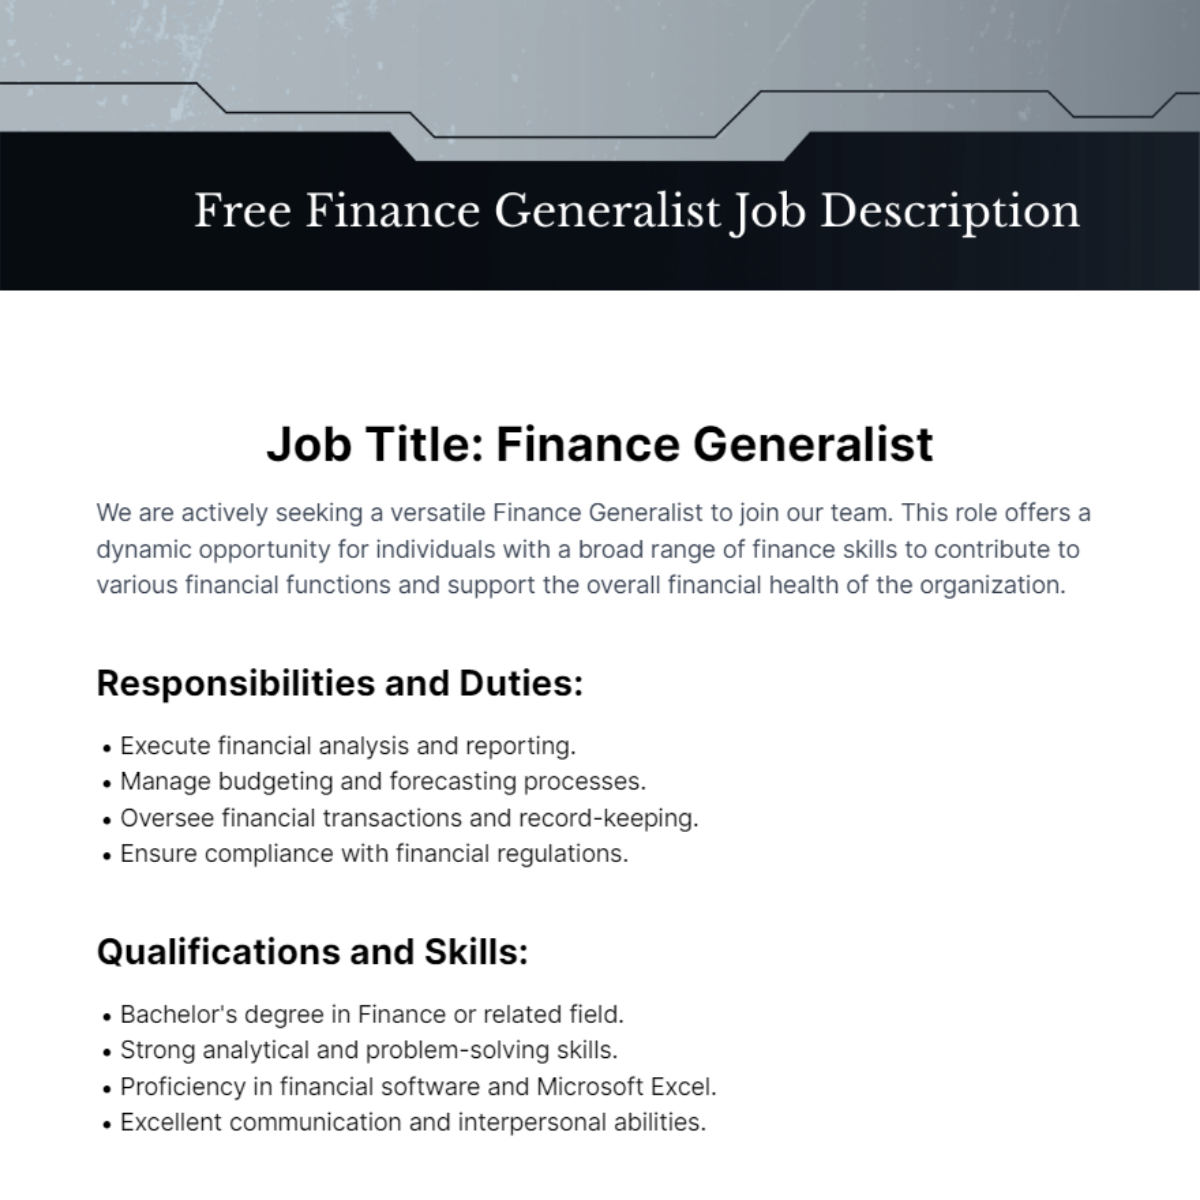 Finance Generalist Job Description Template